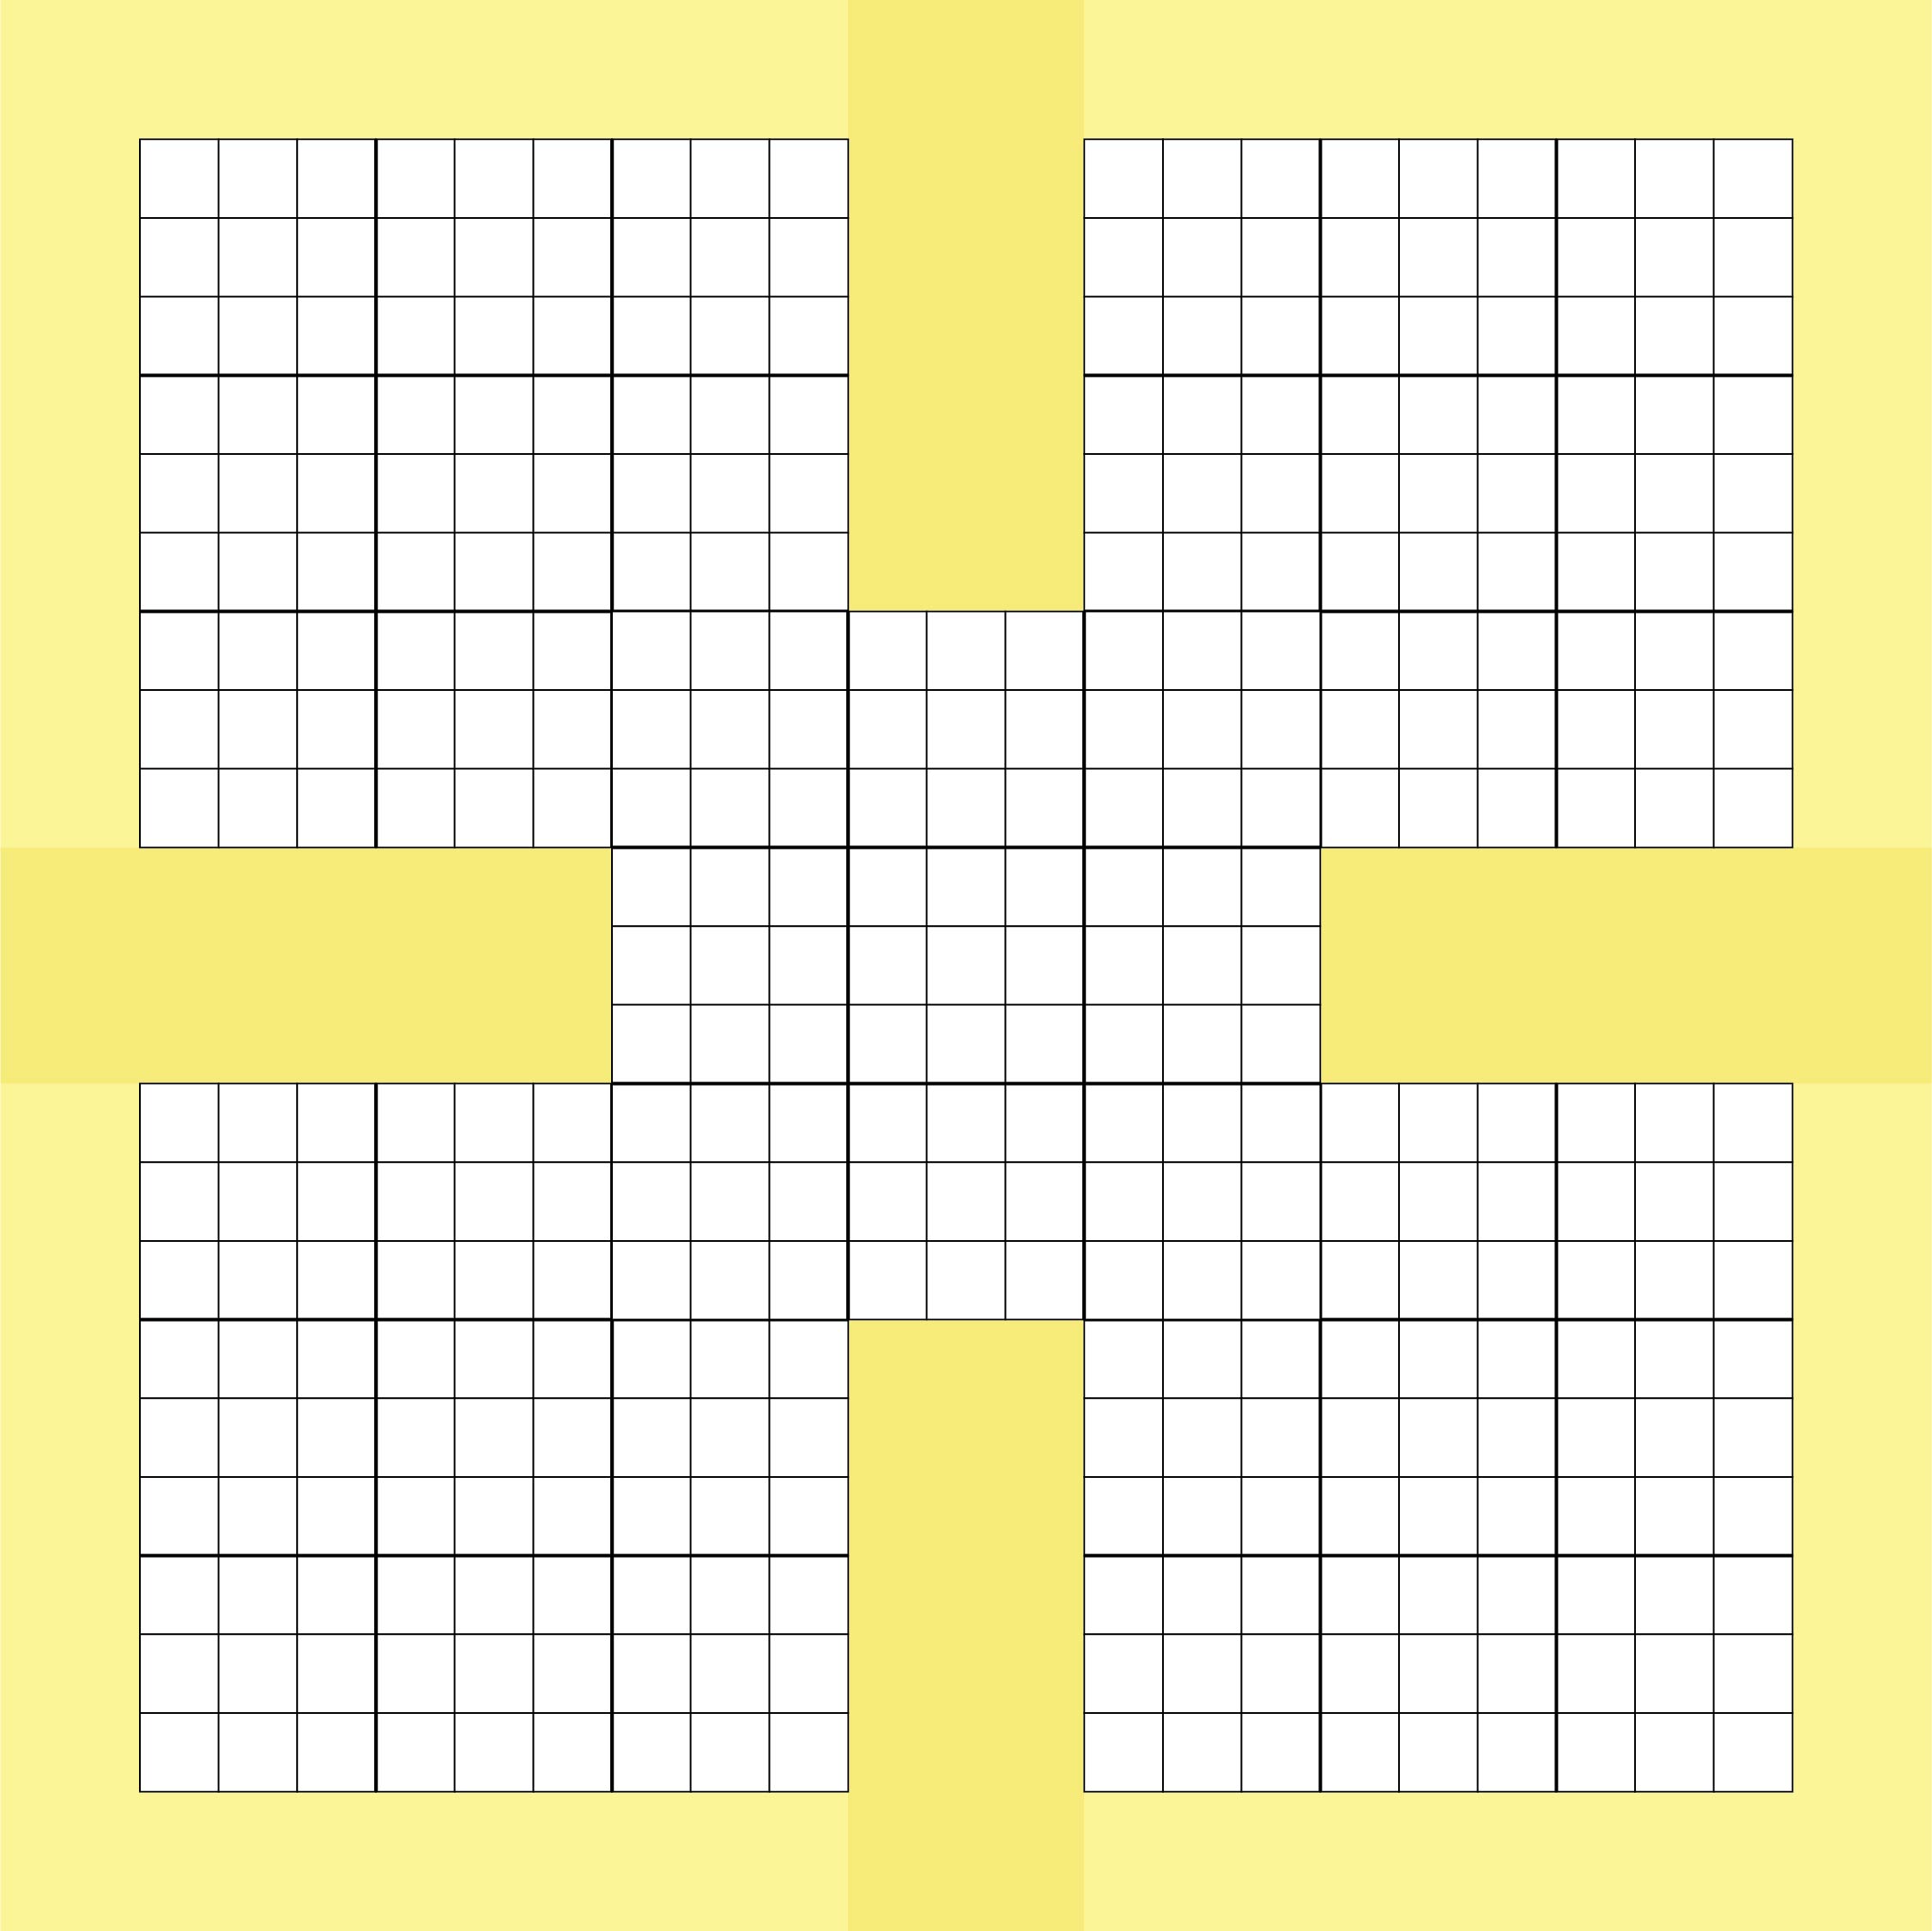 double sided blank sudoku grid